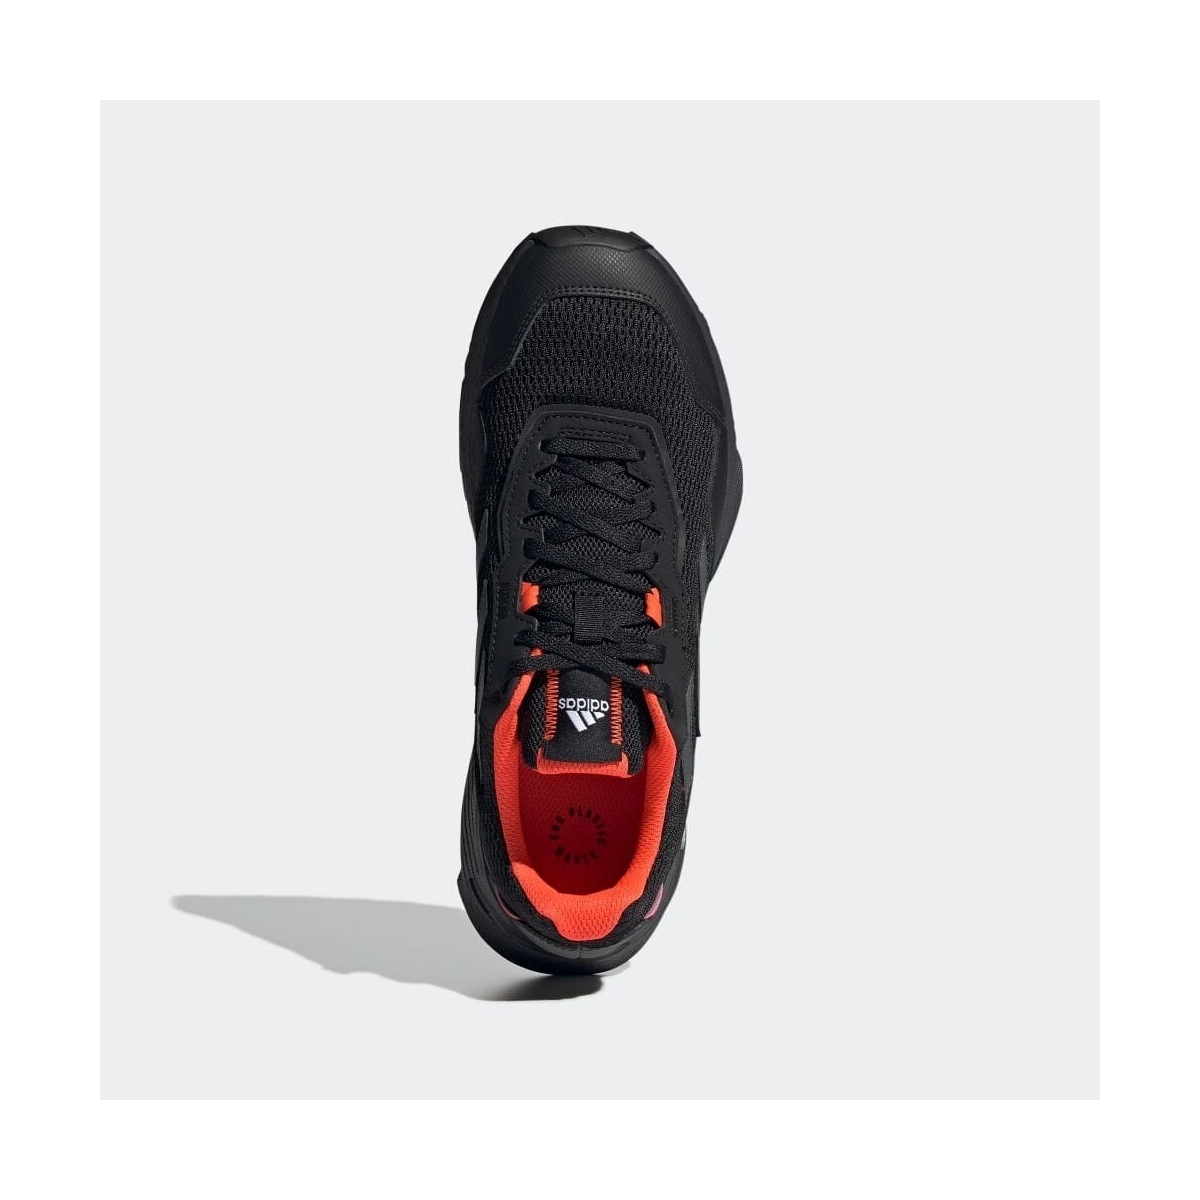 adidas Tracefinder Siyah Spor Ayakkabı (Q47236)